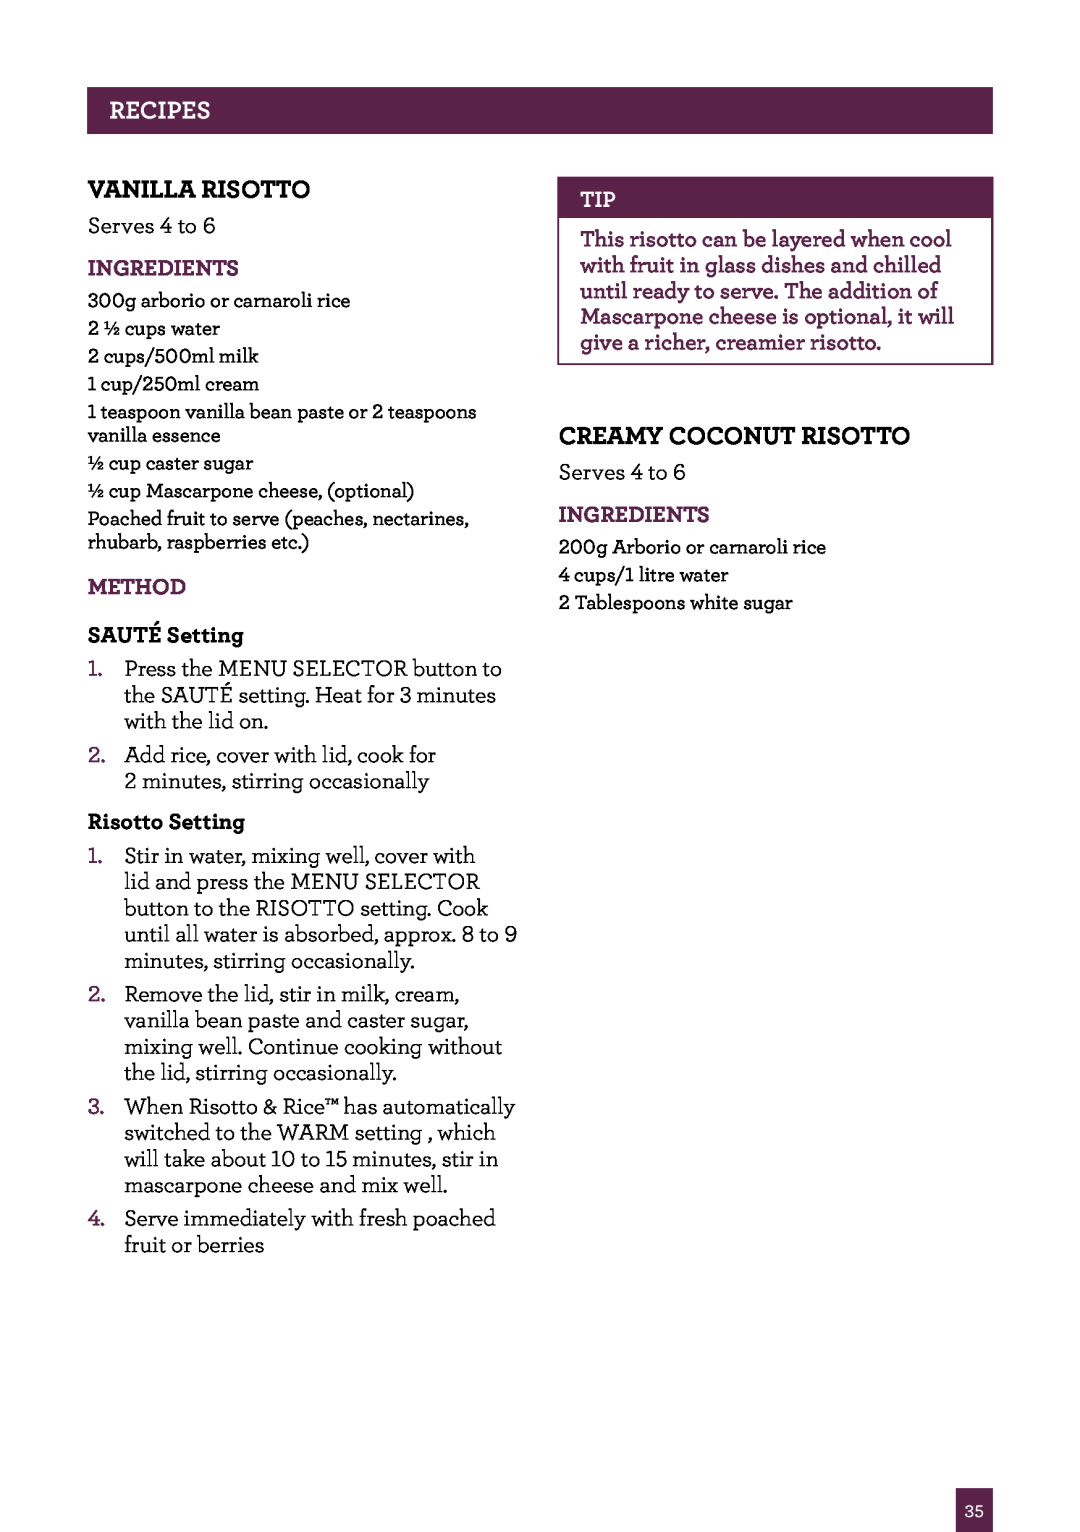 Breville BRC520 manual Vanilla Risotto, Creamy Coconut Risotto, recipes, Ingredients, Method 